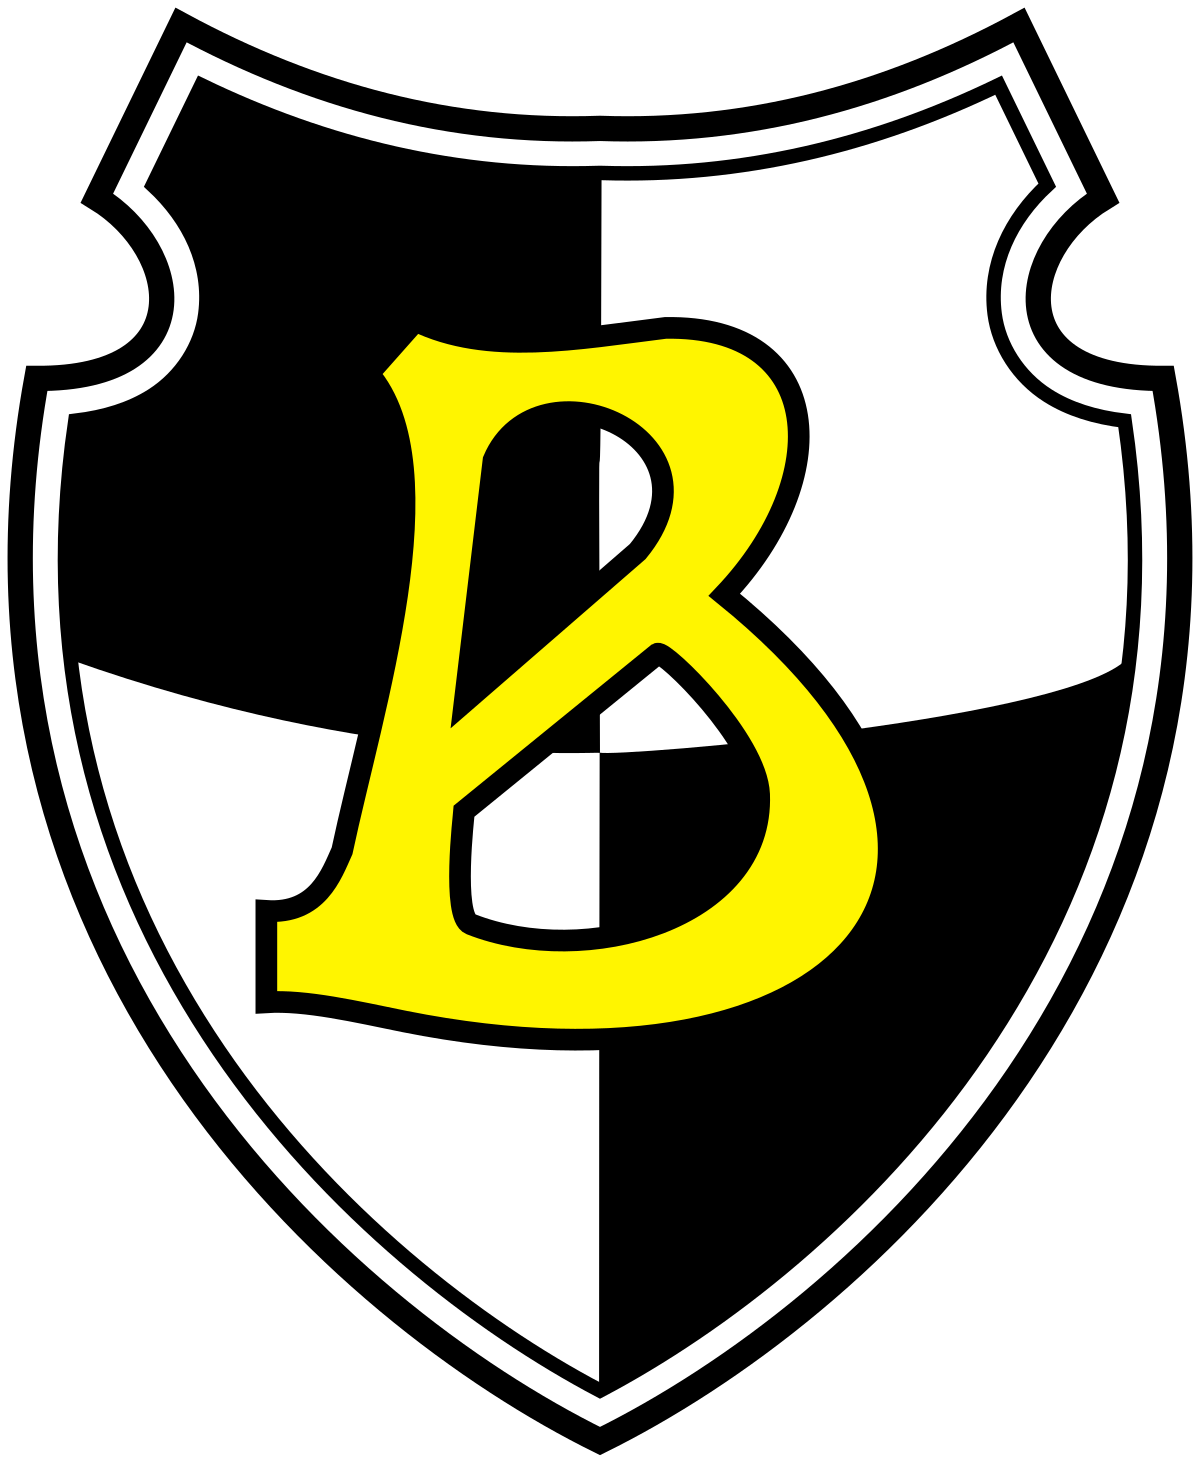 Borussia Neunkirchen